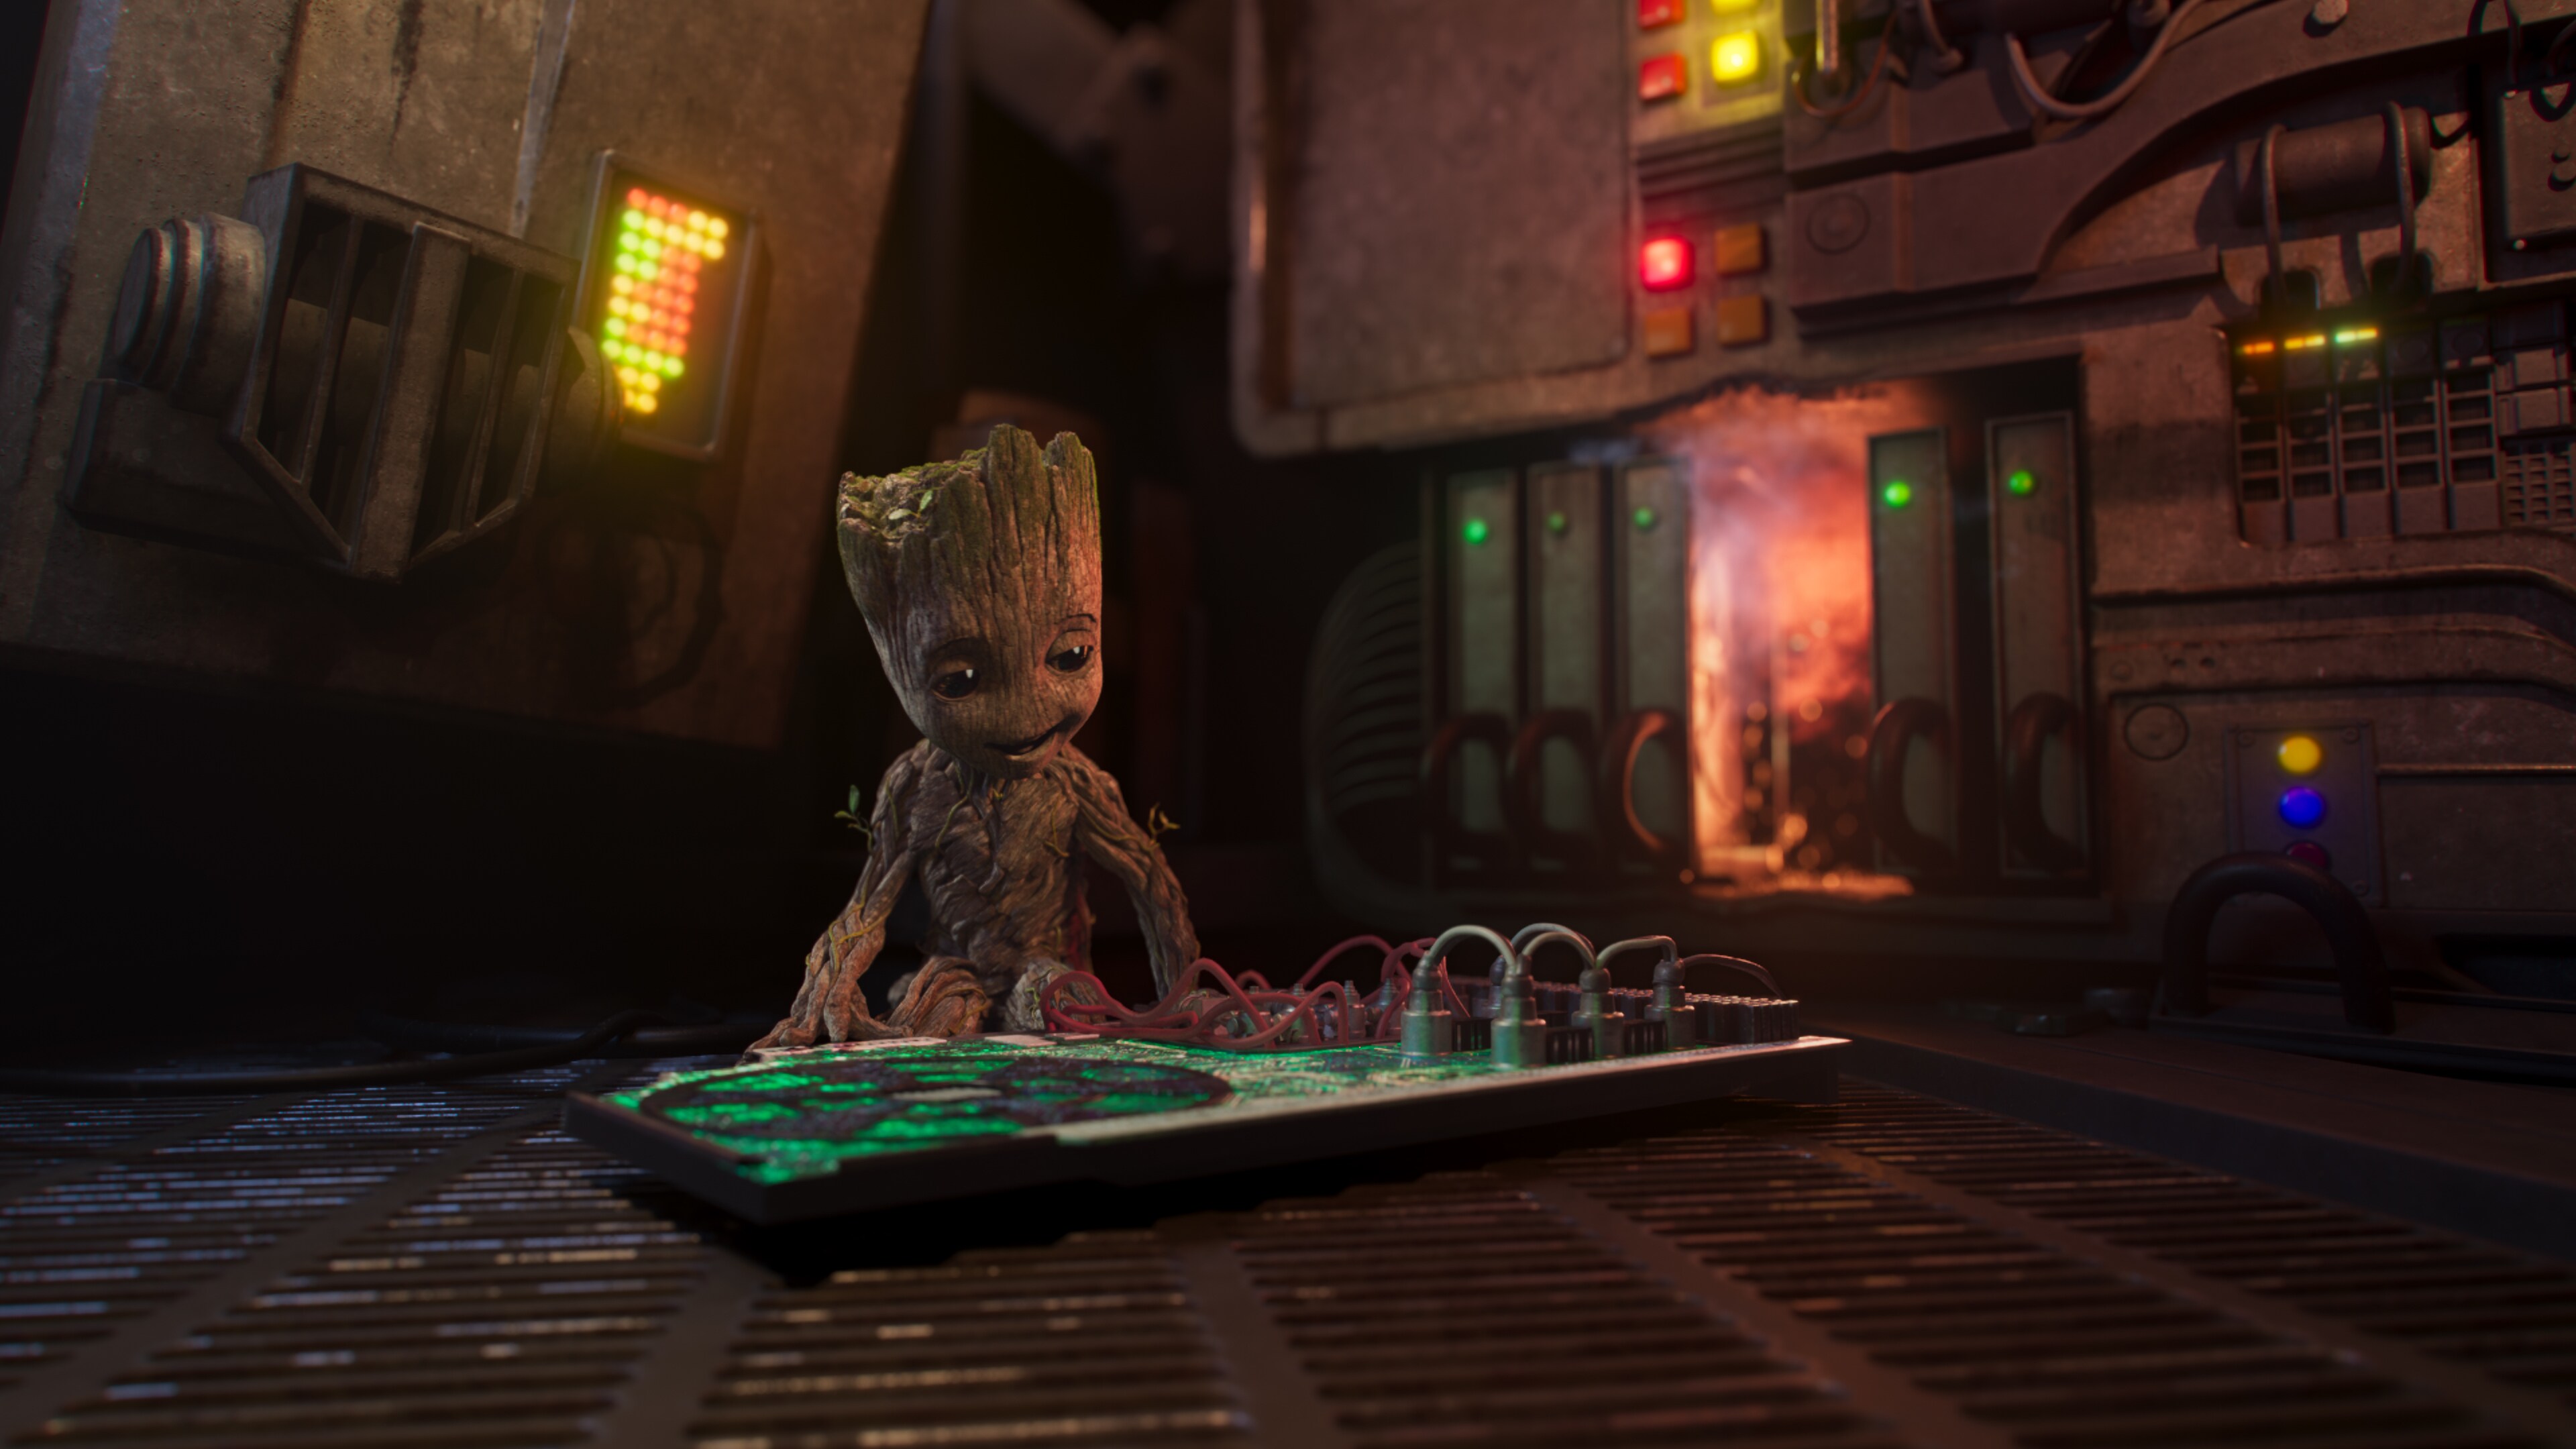 Groot (voiced by Vin Diesel) in Marvel Studios' I AM GROOT exclusively on Disney+. © 2022 MARVEL.